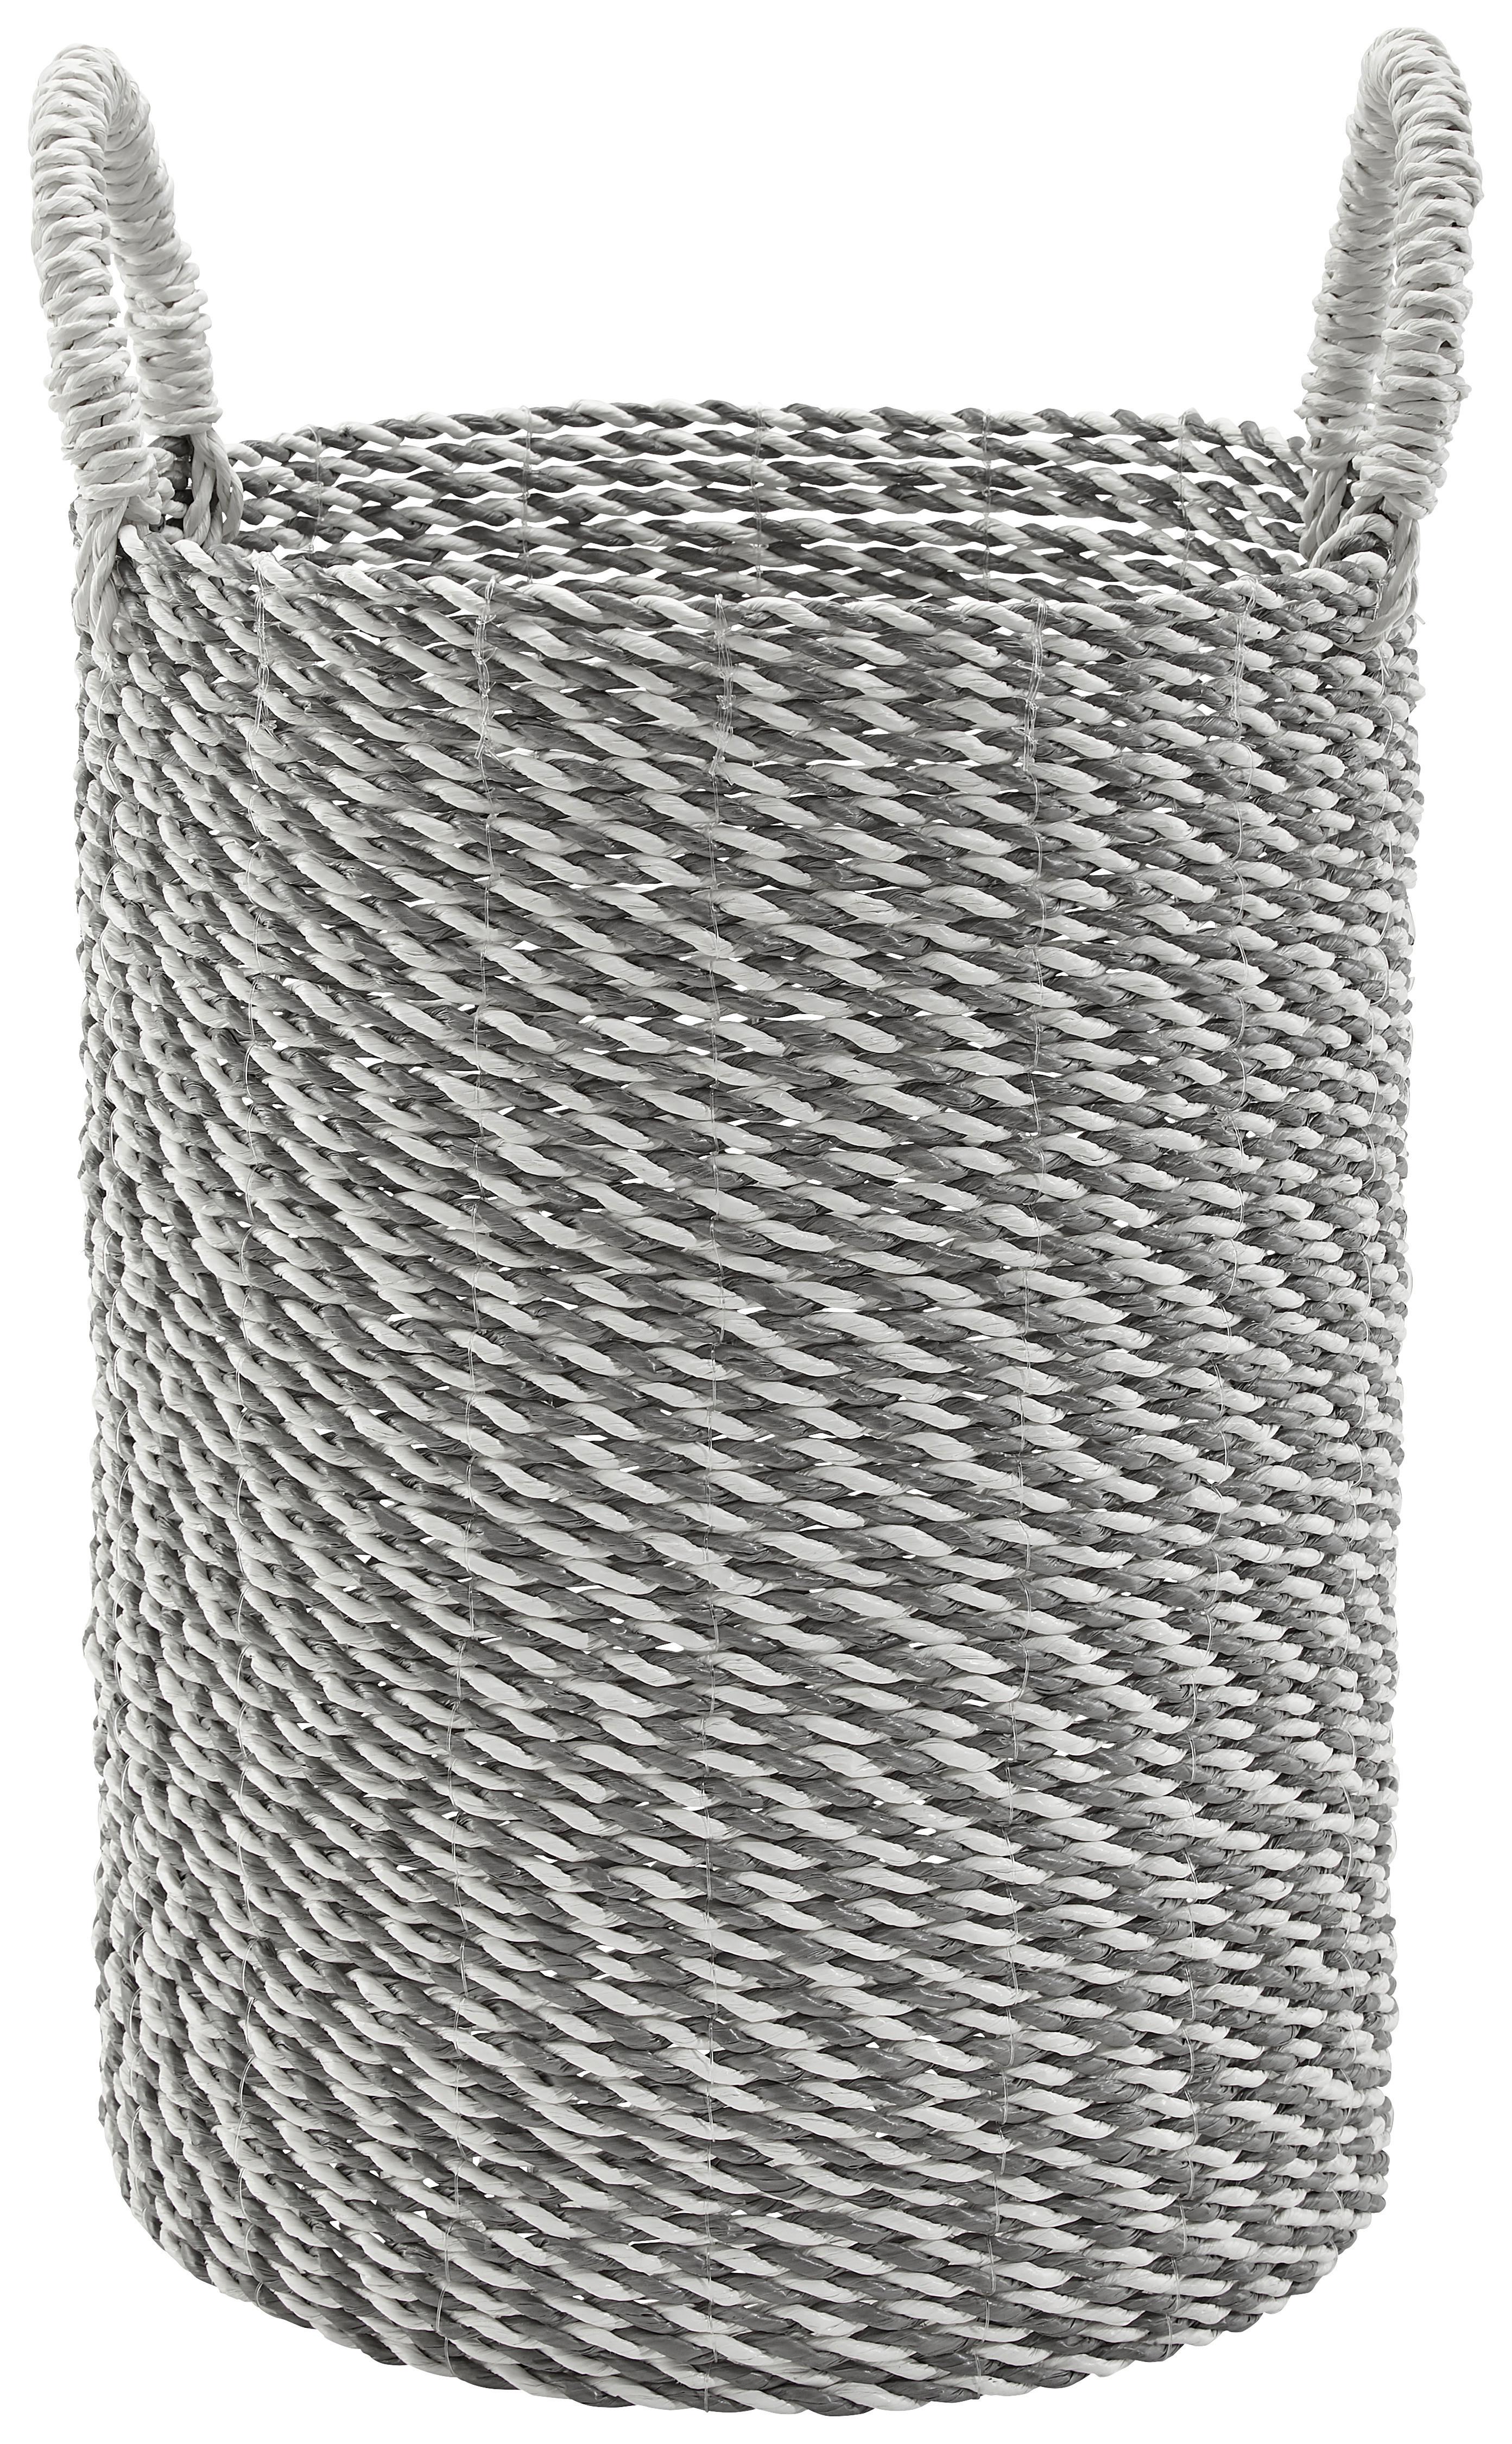 Korb Shannon in Grau Höhe ca. 41 cm - Grau, MODERN, Kunststoff (32/41cm) - Bessagi Home